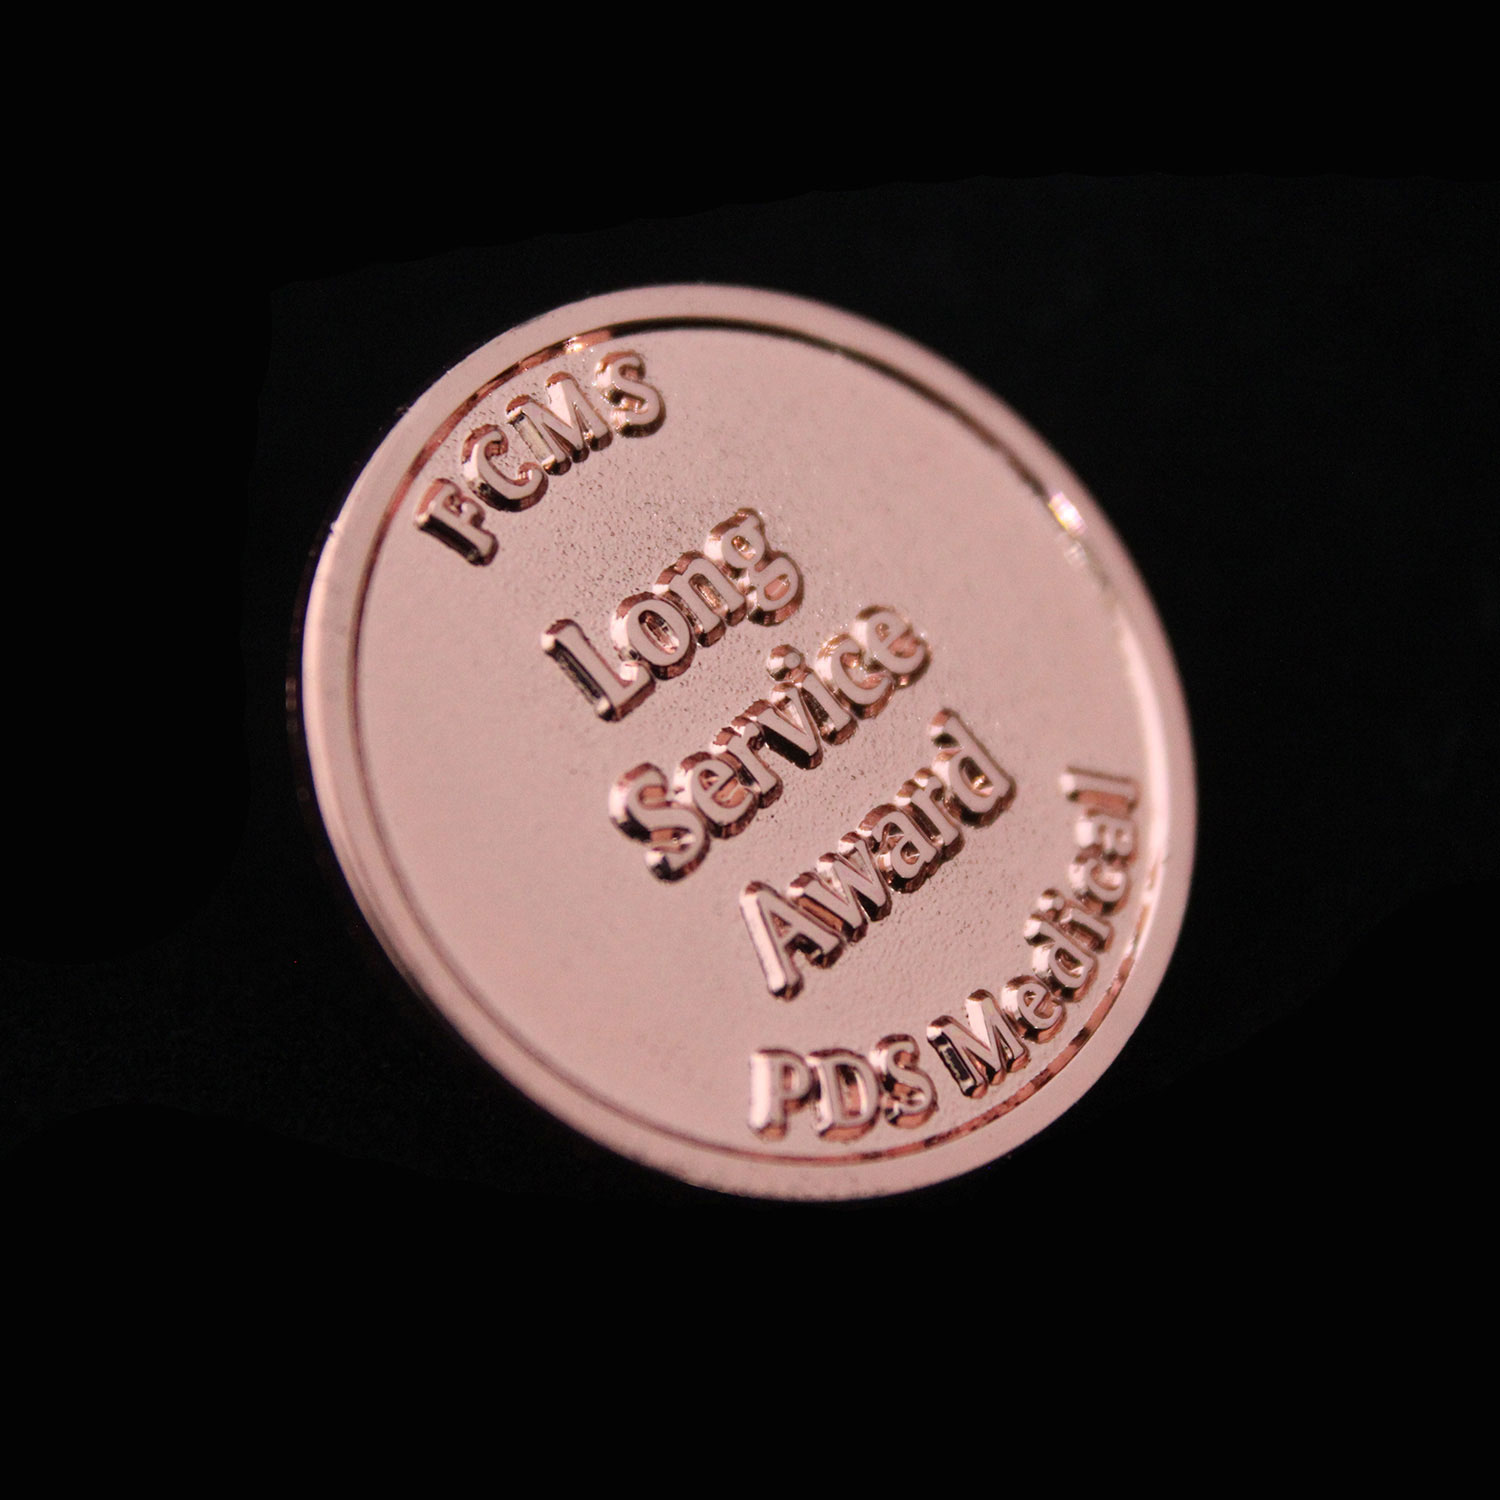 Bronze Lapel pin for FCMS PDS Medical on black background